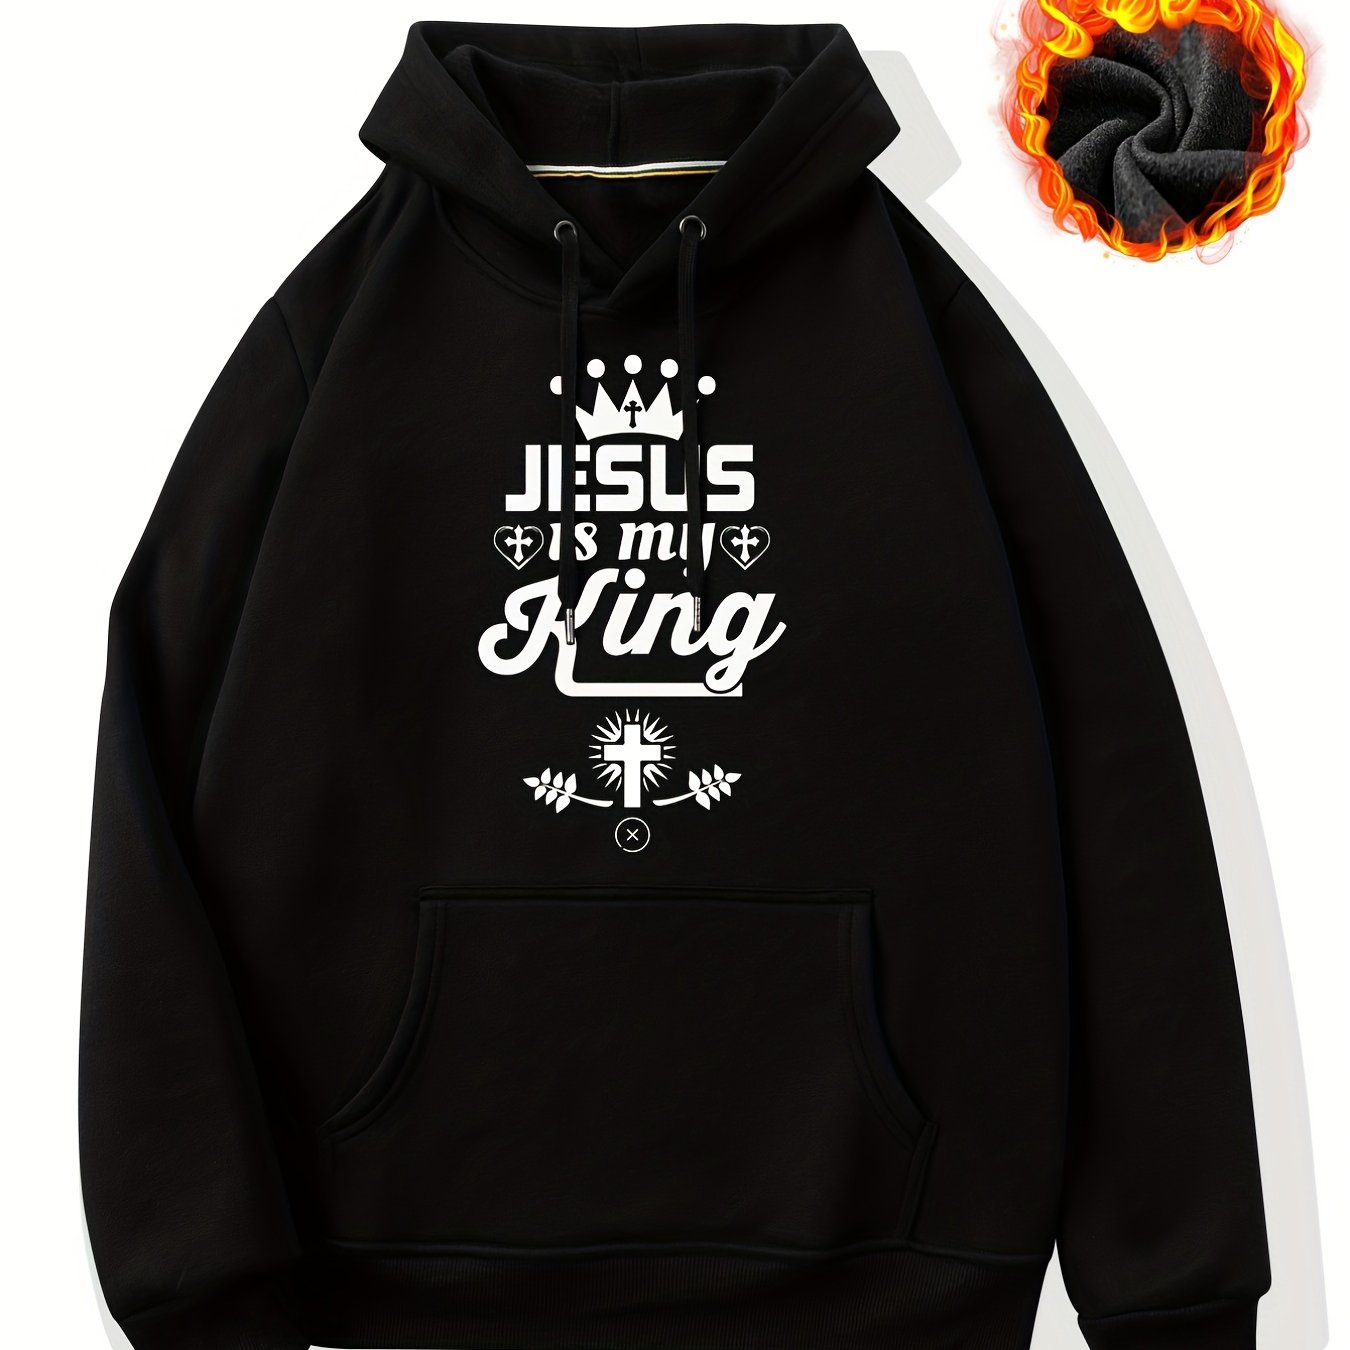 JESUS IS MY KING Men's Christian Pullover Hooded Sweatshirt claimedbygoddesigns